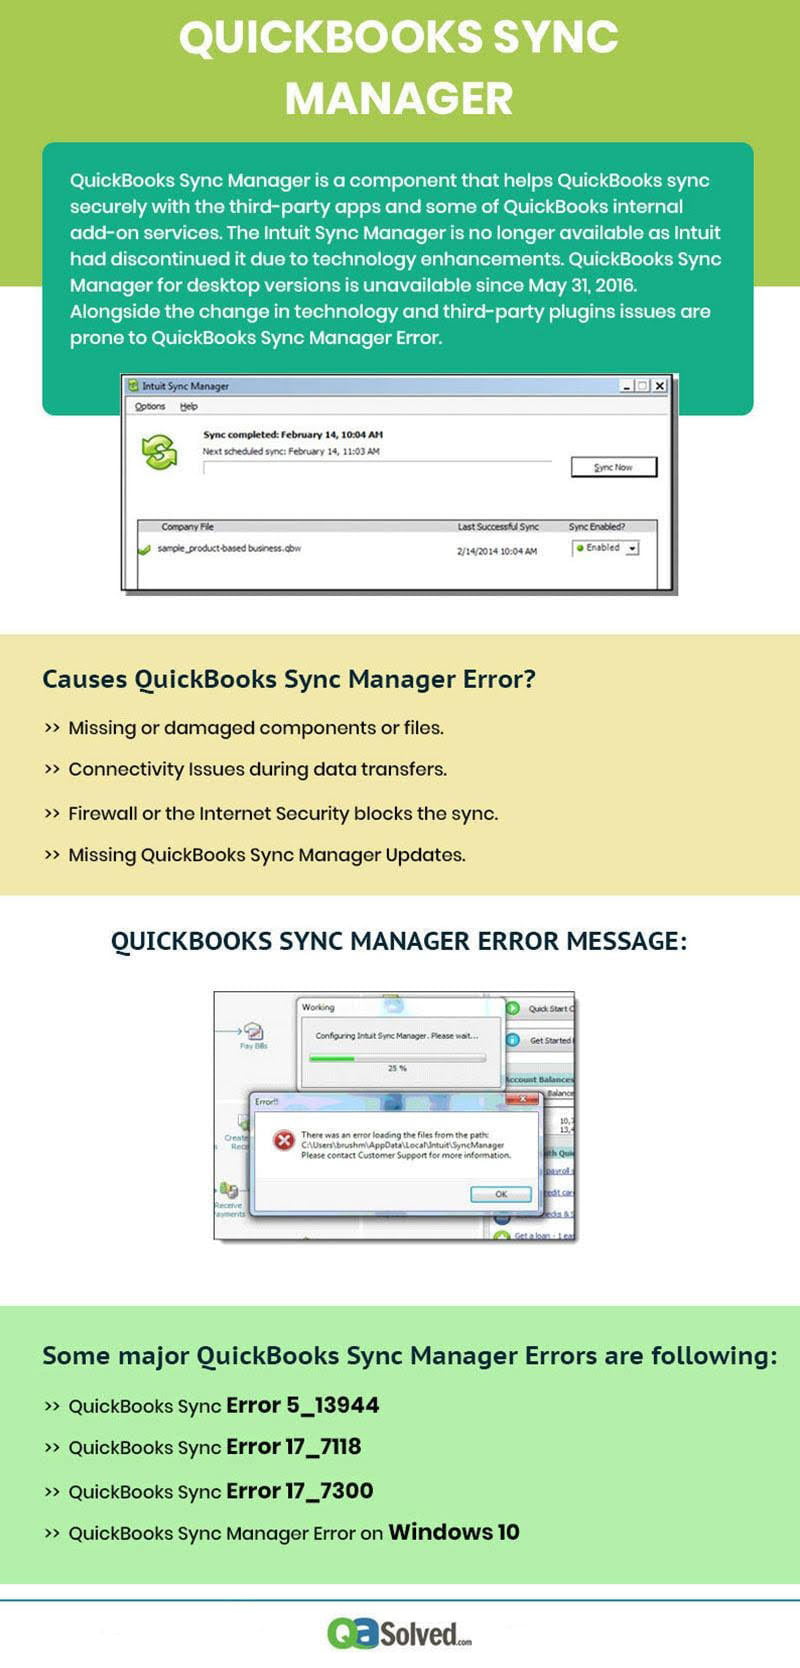 quickbooks sync manager error infographic